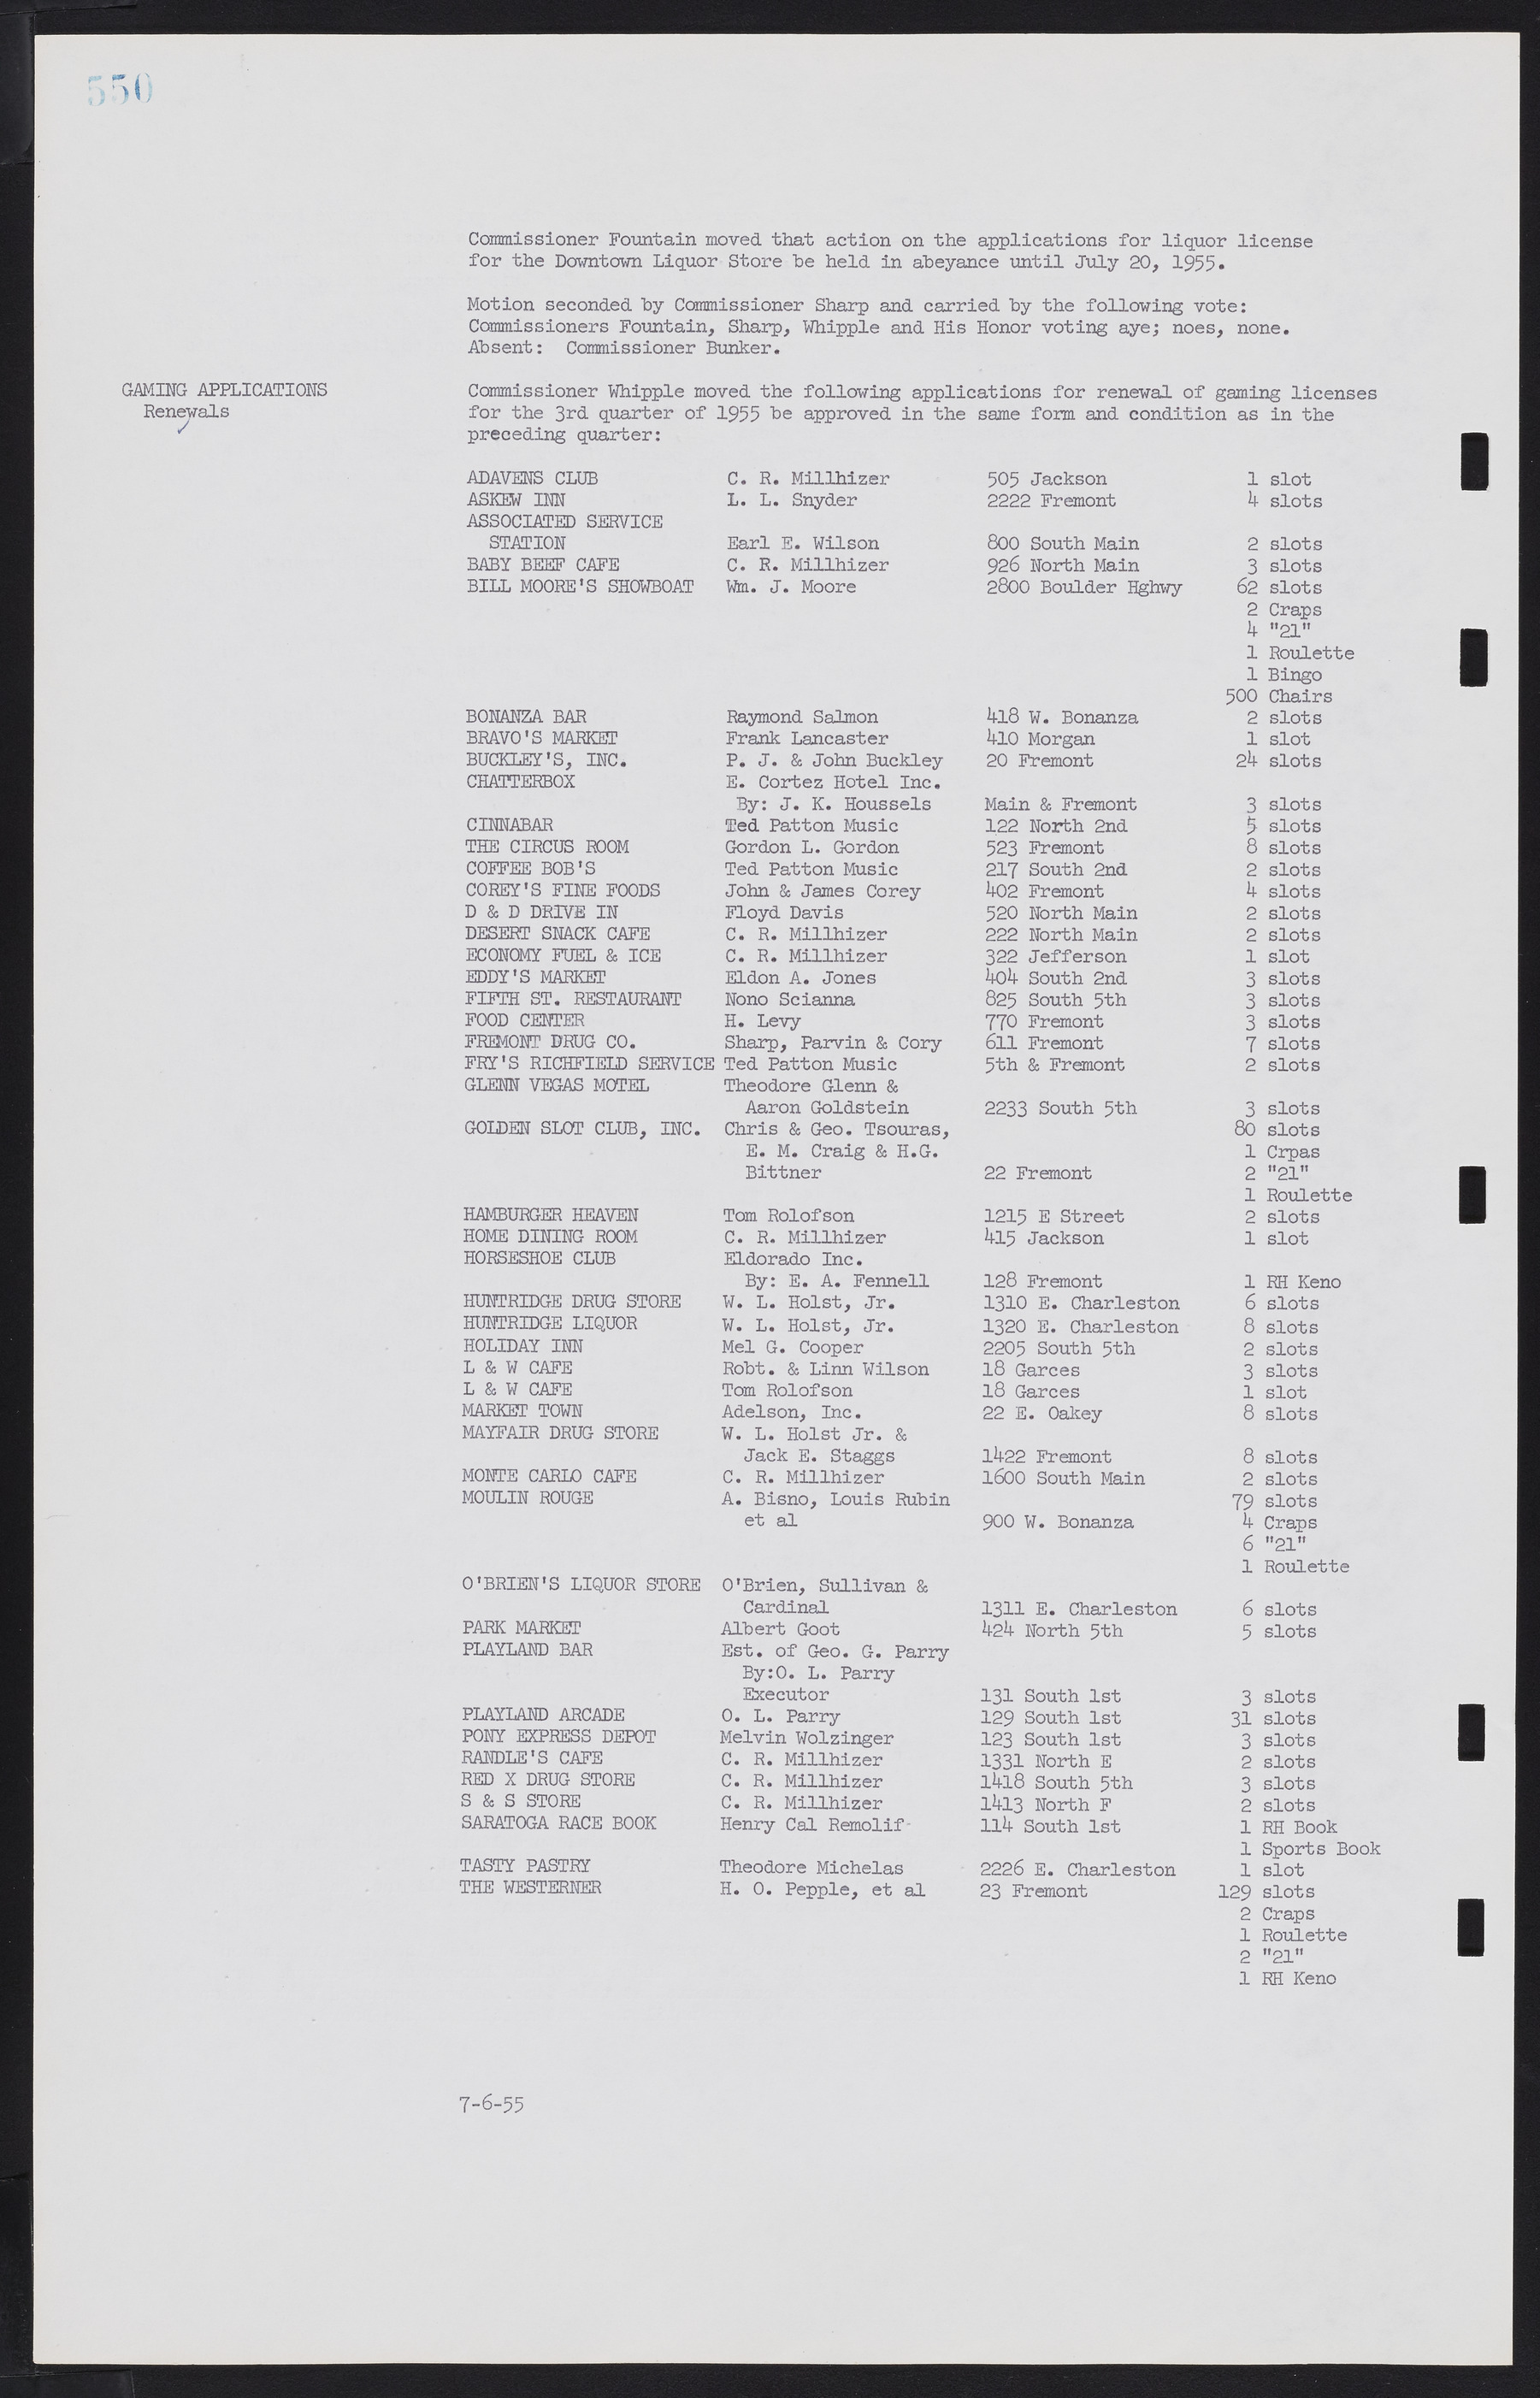 Las Vegas City Commission Minutes, February 17, 1954 to September 21, 1955, lvc000009-556